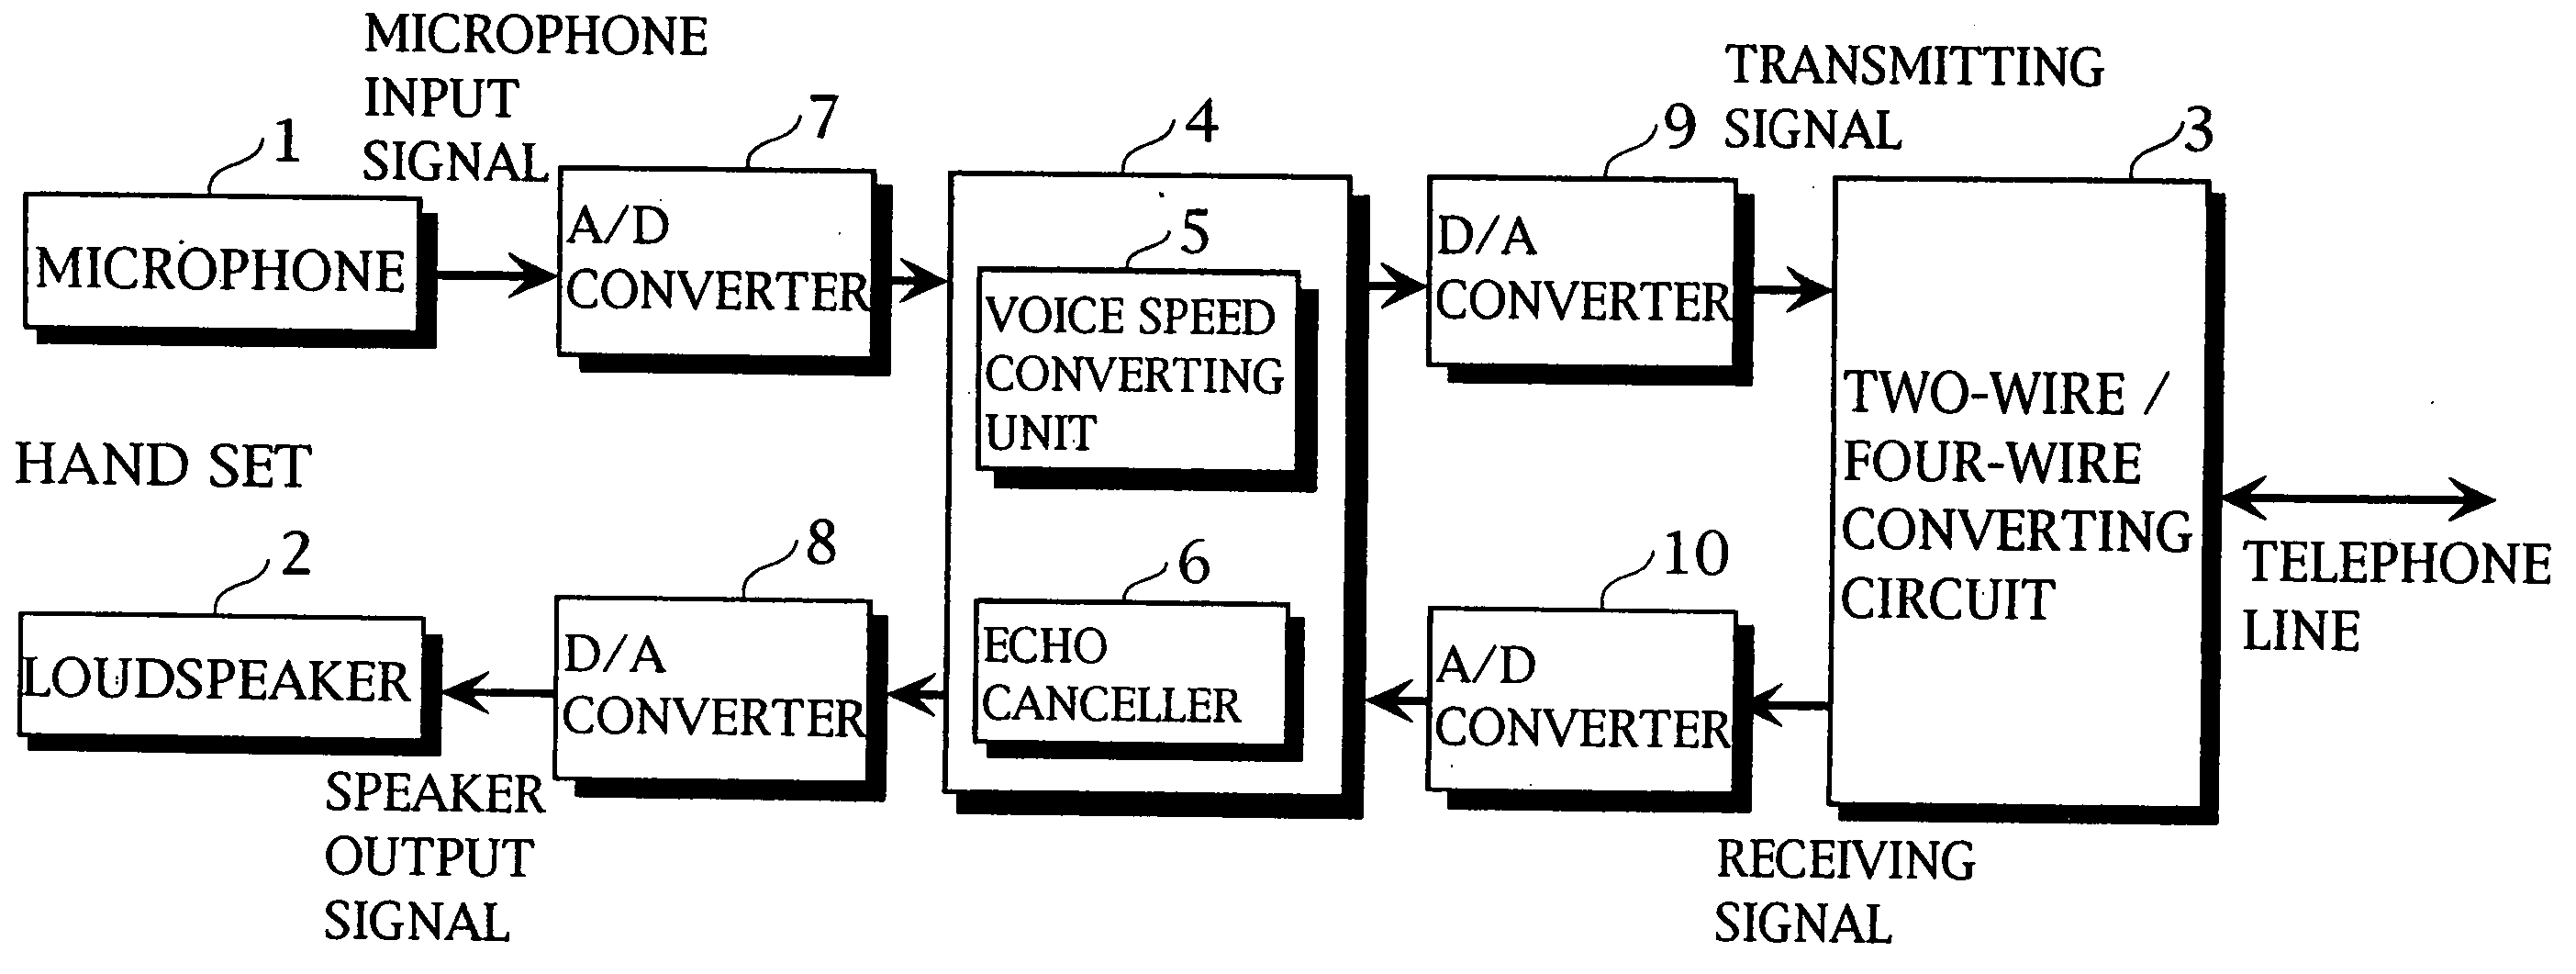 Speech communication apparatus